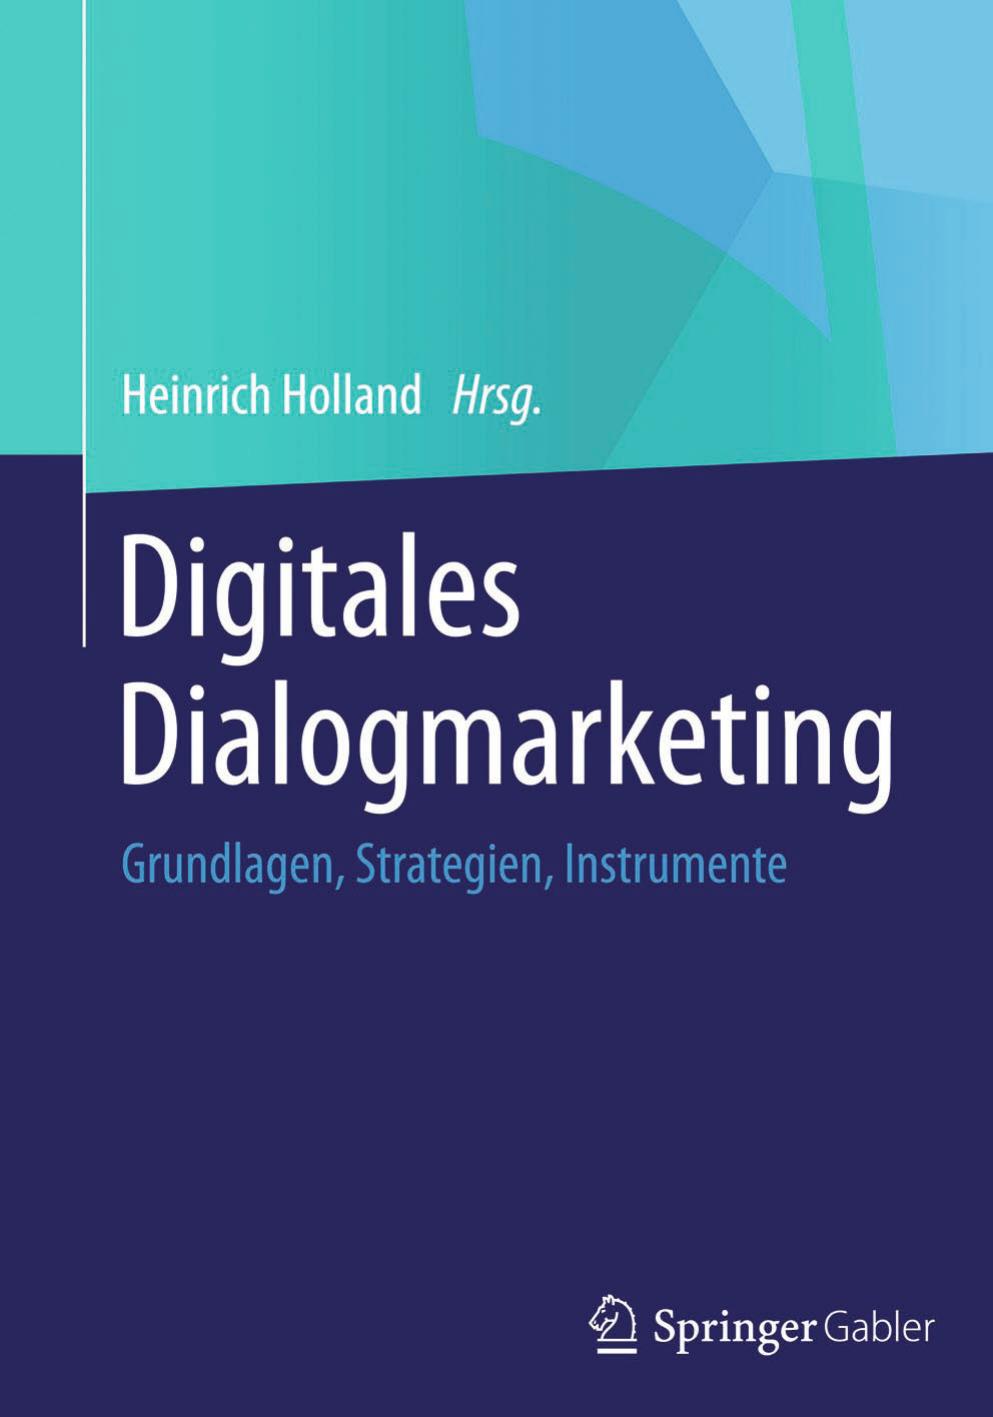 Digitales Dialogmarketing